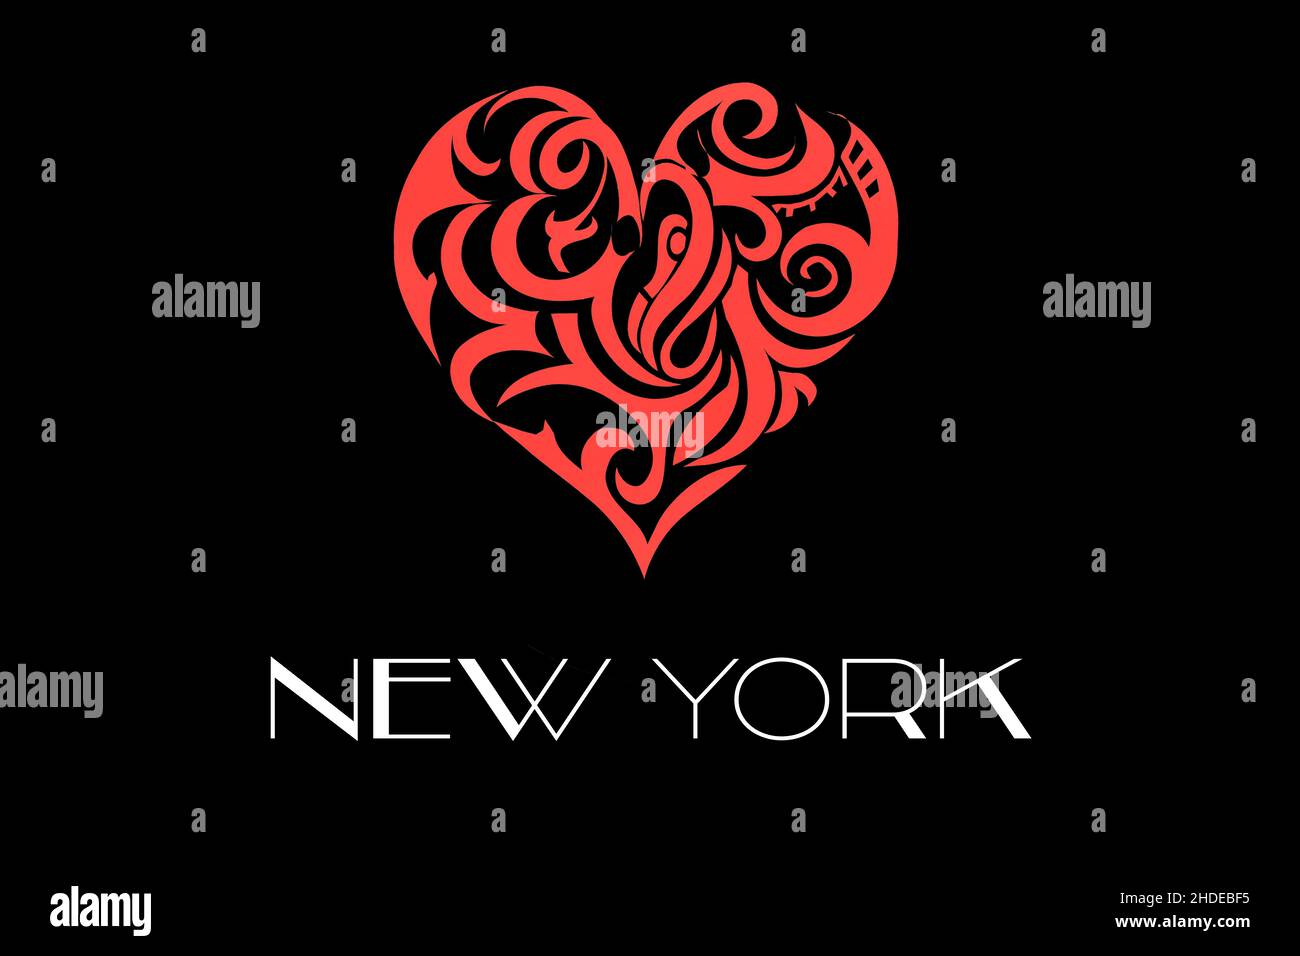 New York Heart - I Love New York - The Big Apple Stock Photo